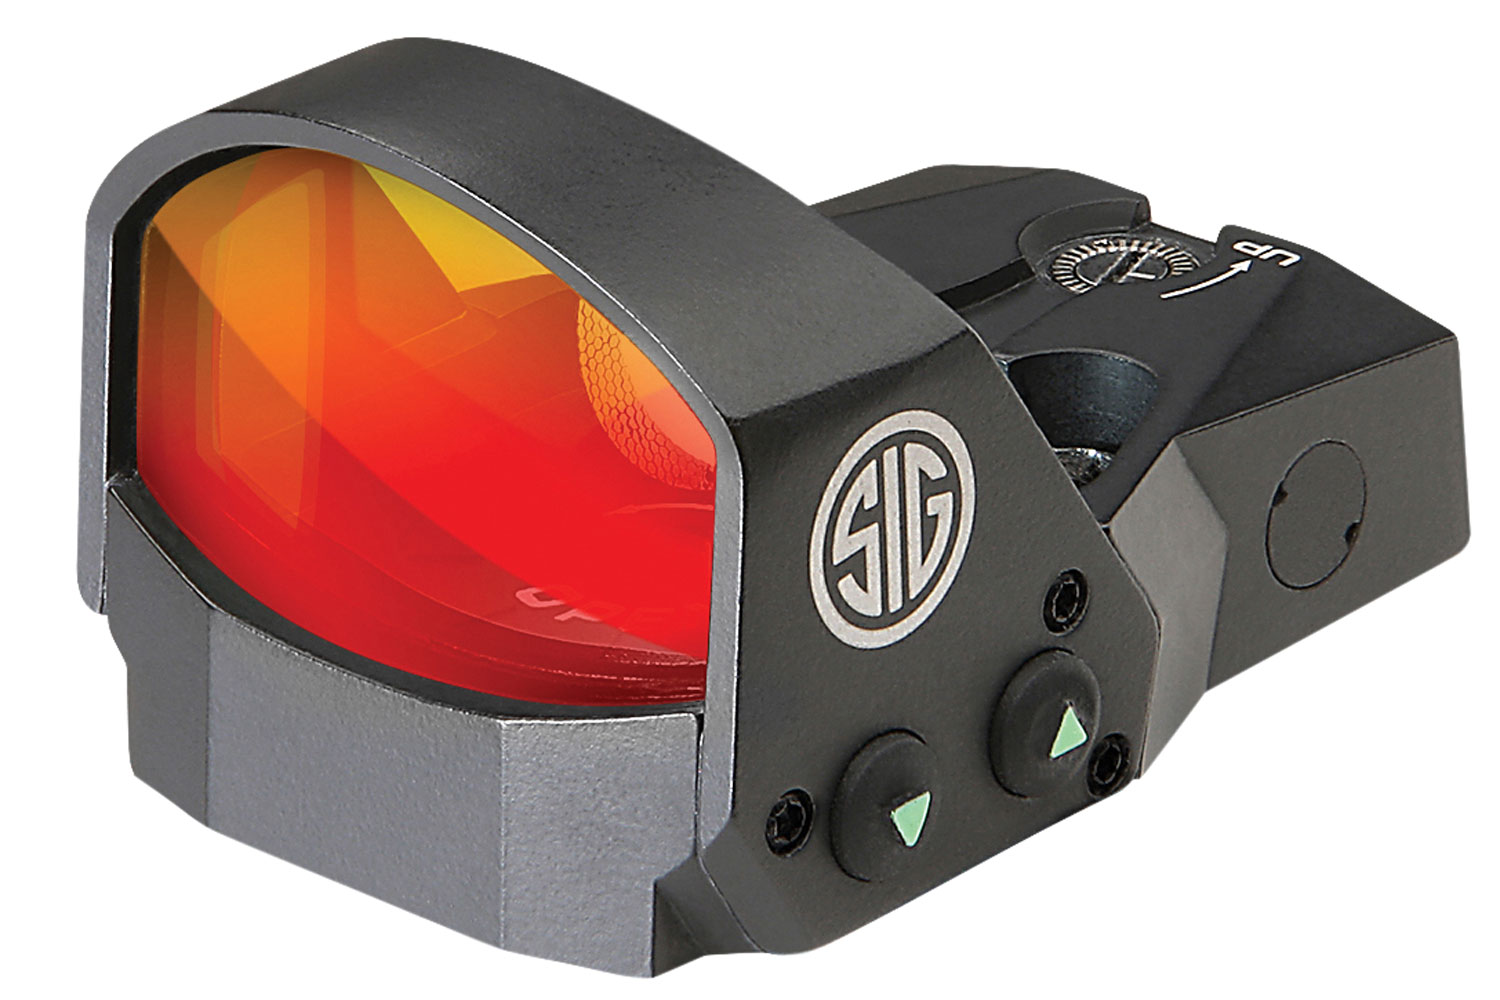 Sig Sauer Electro-Optics SOR11600 Romeo1  Black 1x 30mm 6 MOA Illuminated Red Dot Reticle